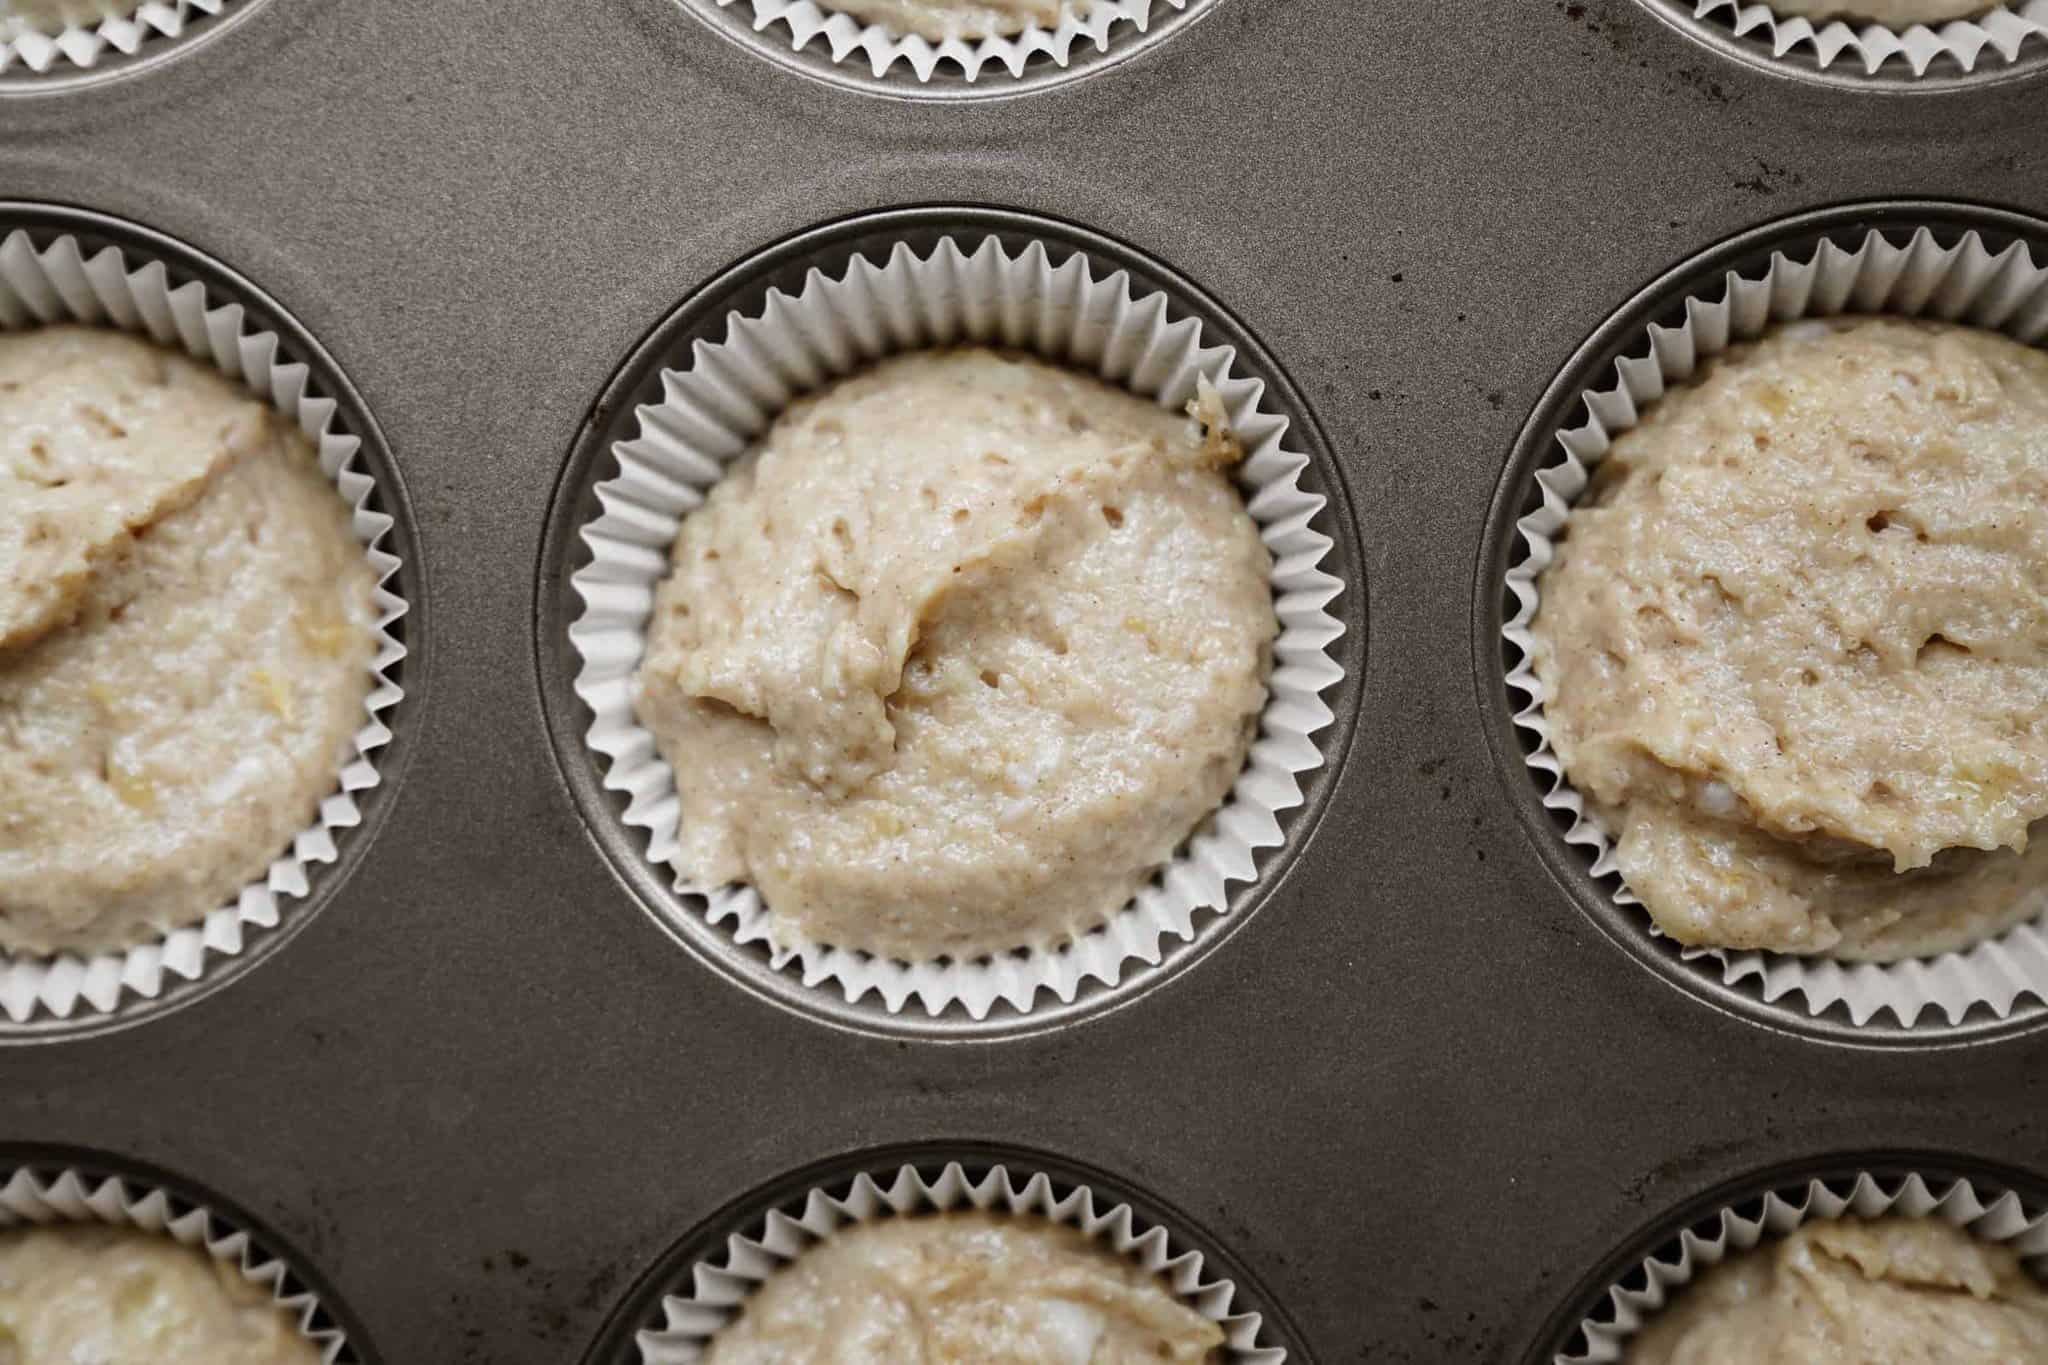 Muffin tin of vegan banana muffin batter pre-cooked